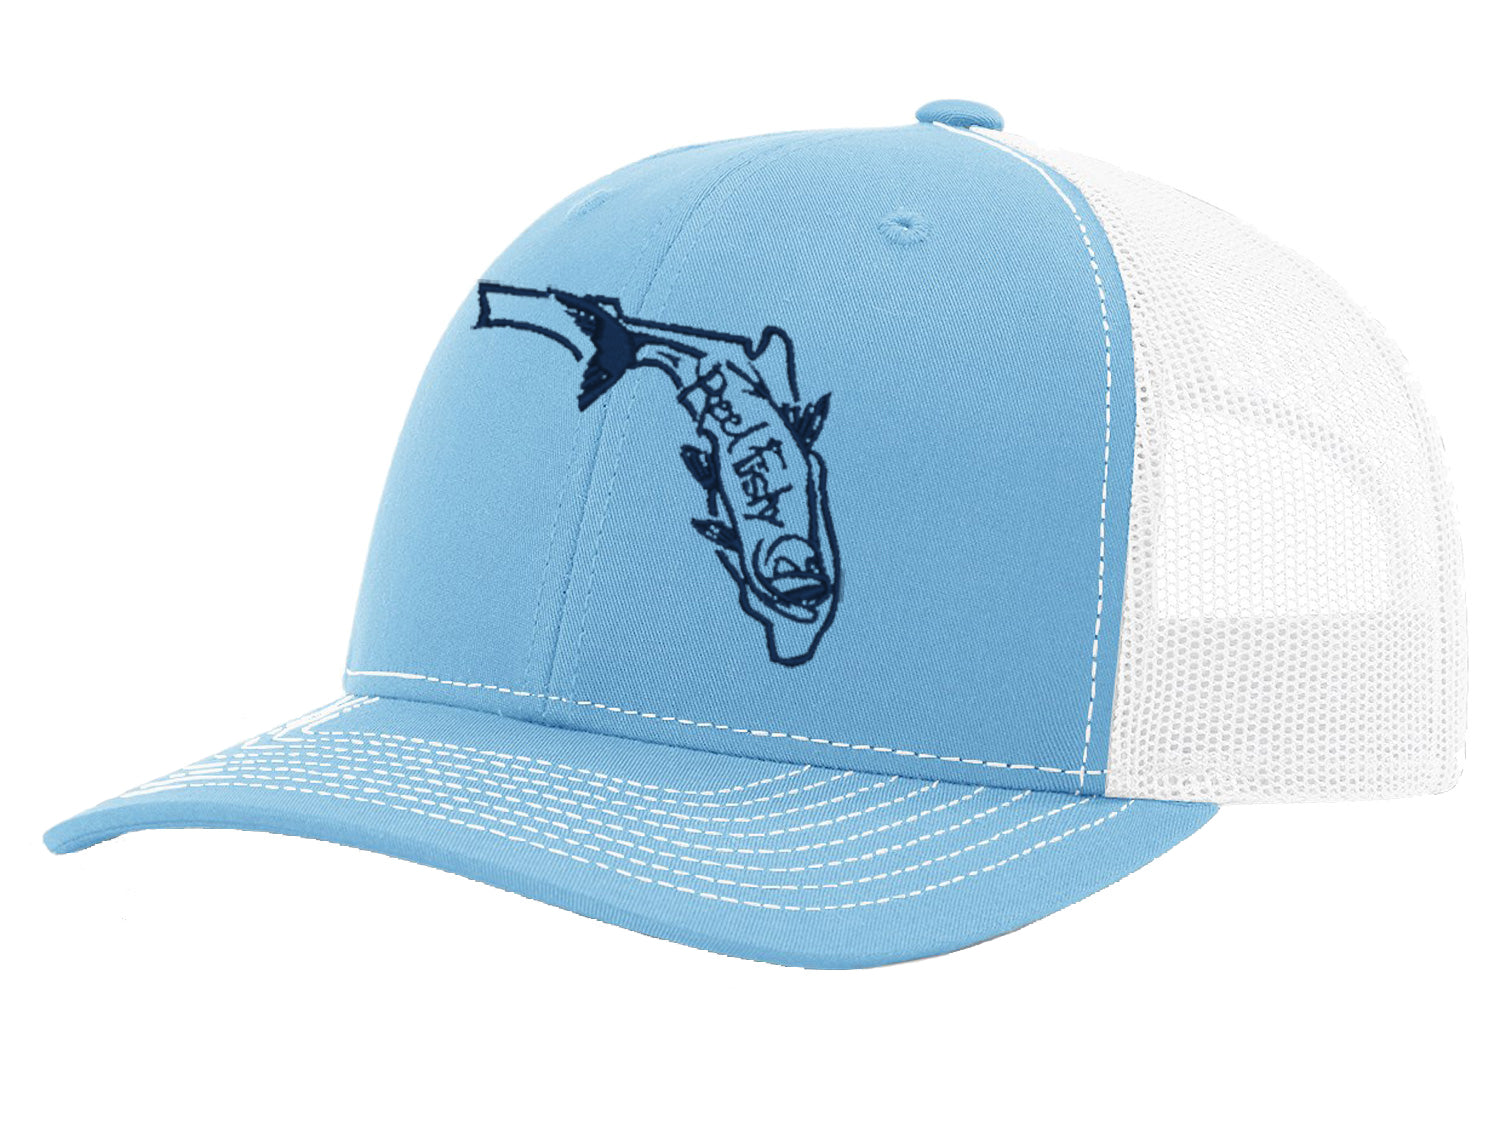 Tarpon Fishing Trucker Hat, Florida Logo Snapback Trucker Cap, Fishing Hat Lt. Blue w/Navy Logo